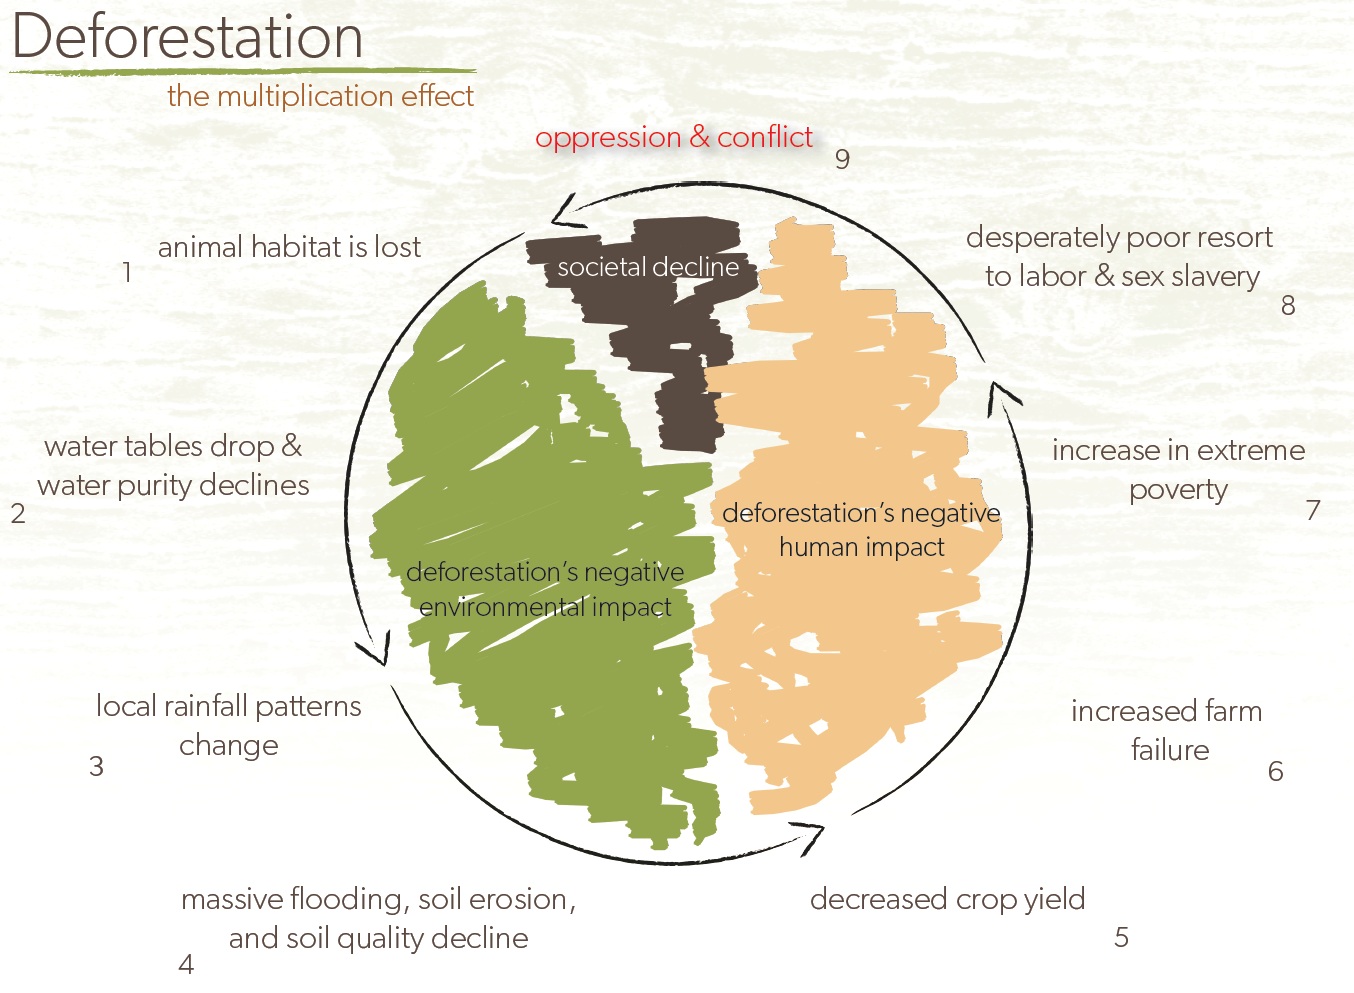 Deforestation - The multiplication effect